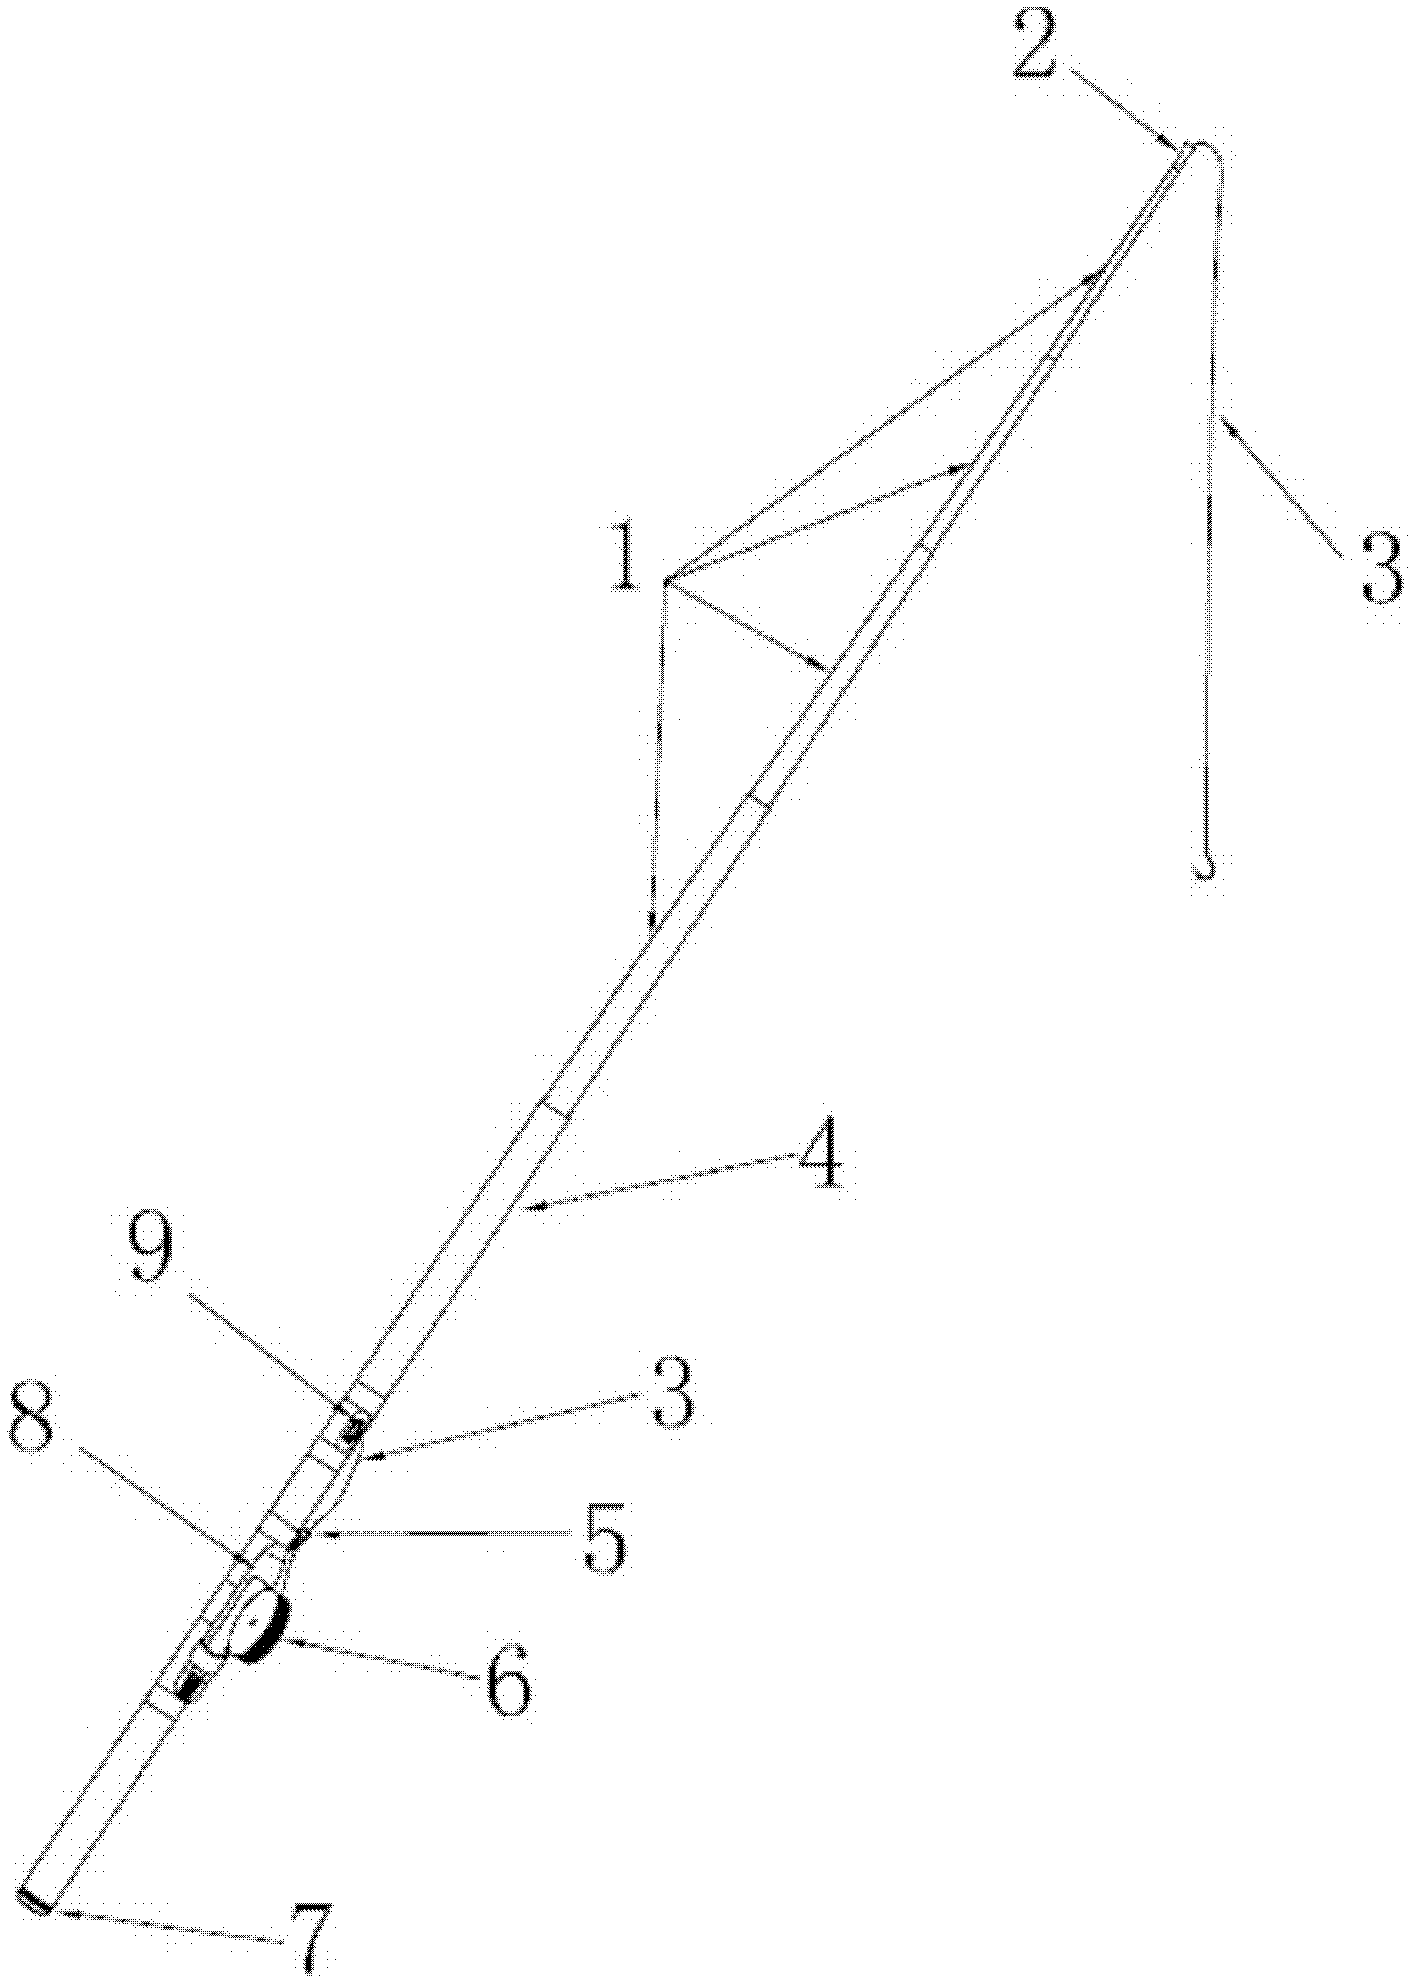 Manufacturing method of throwing dual-purpose telescopic hollow fishing rod